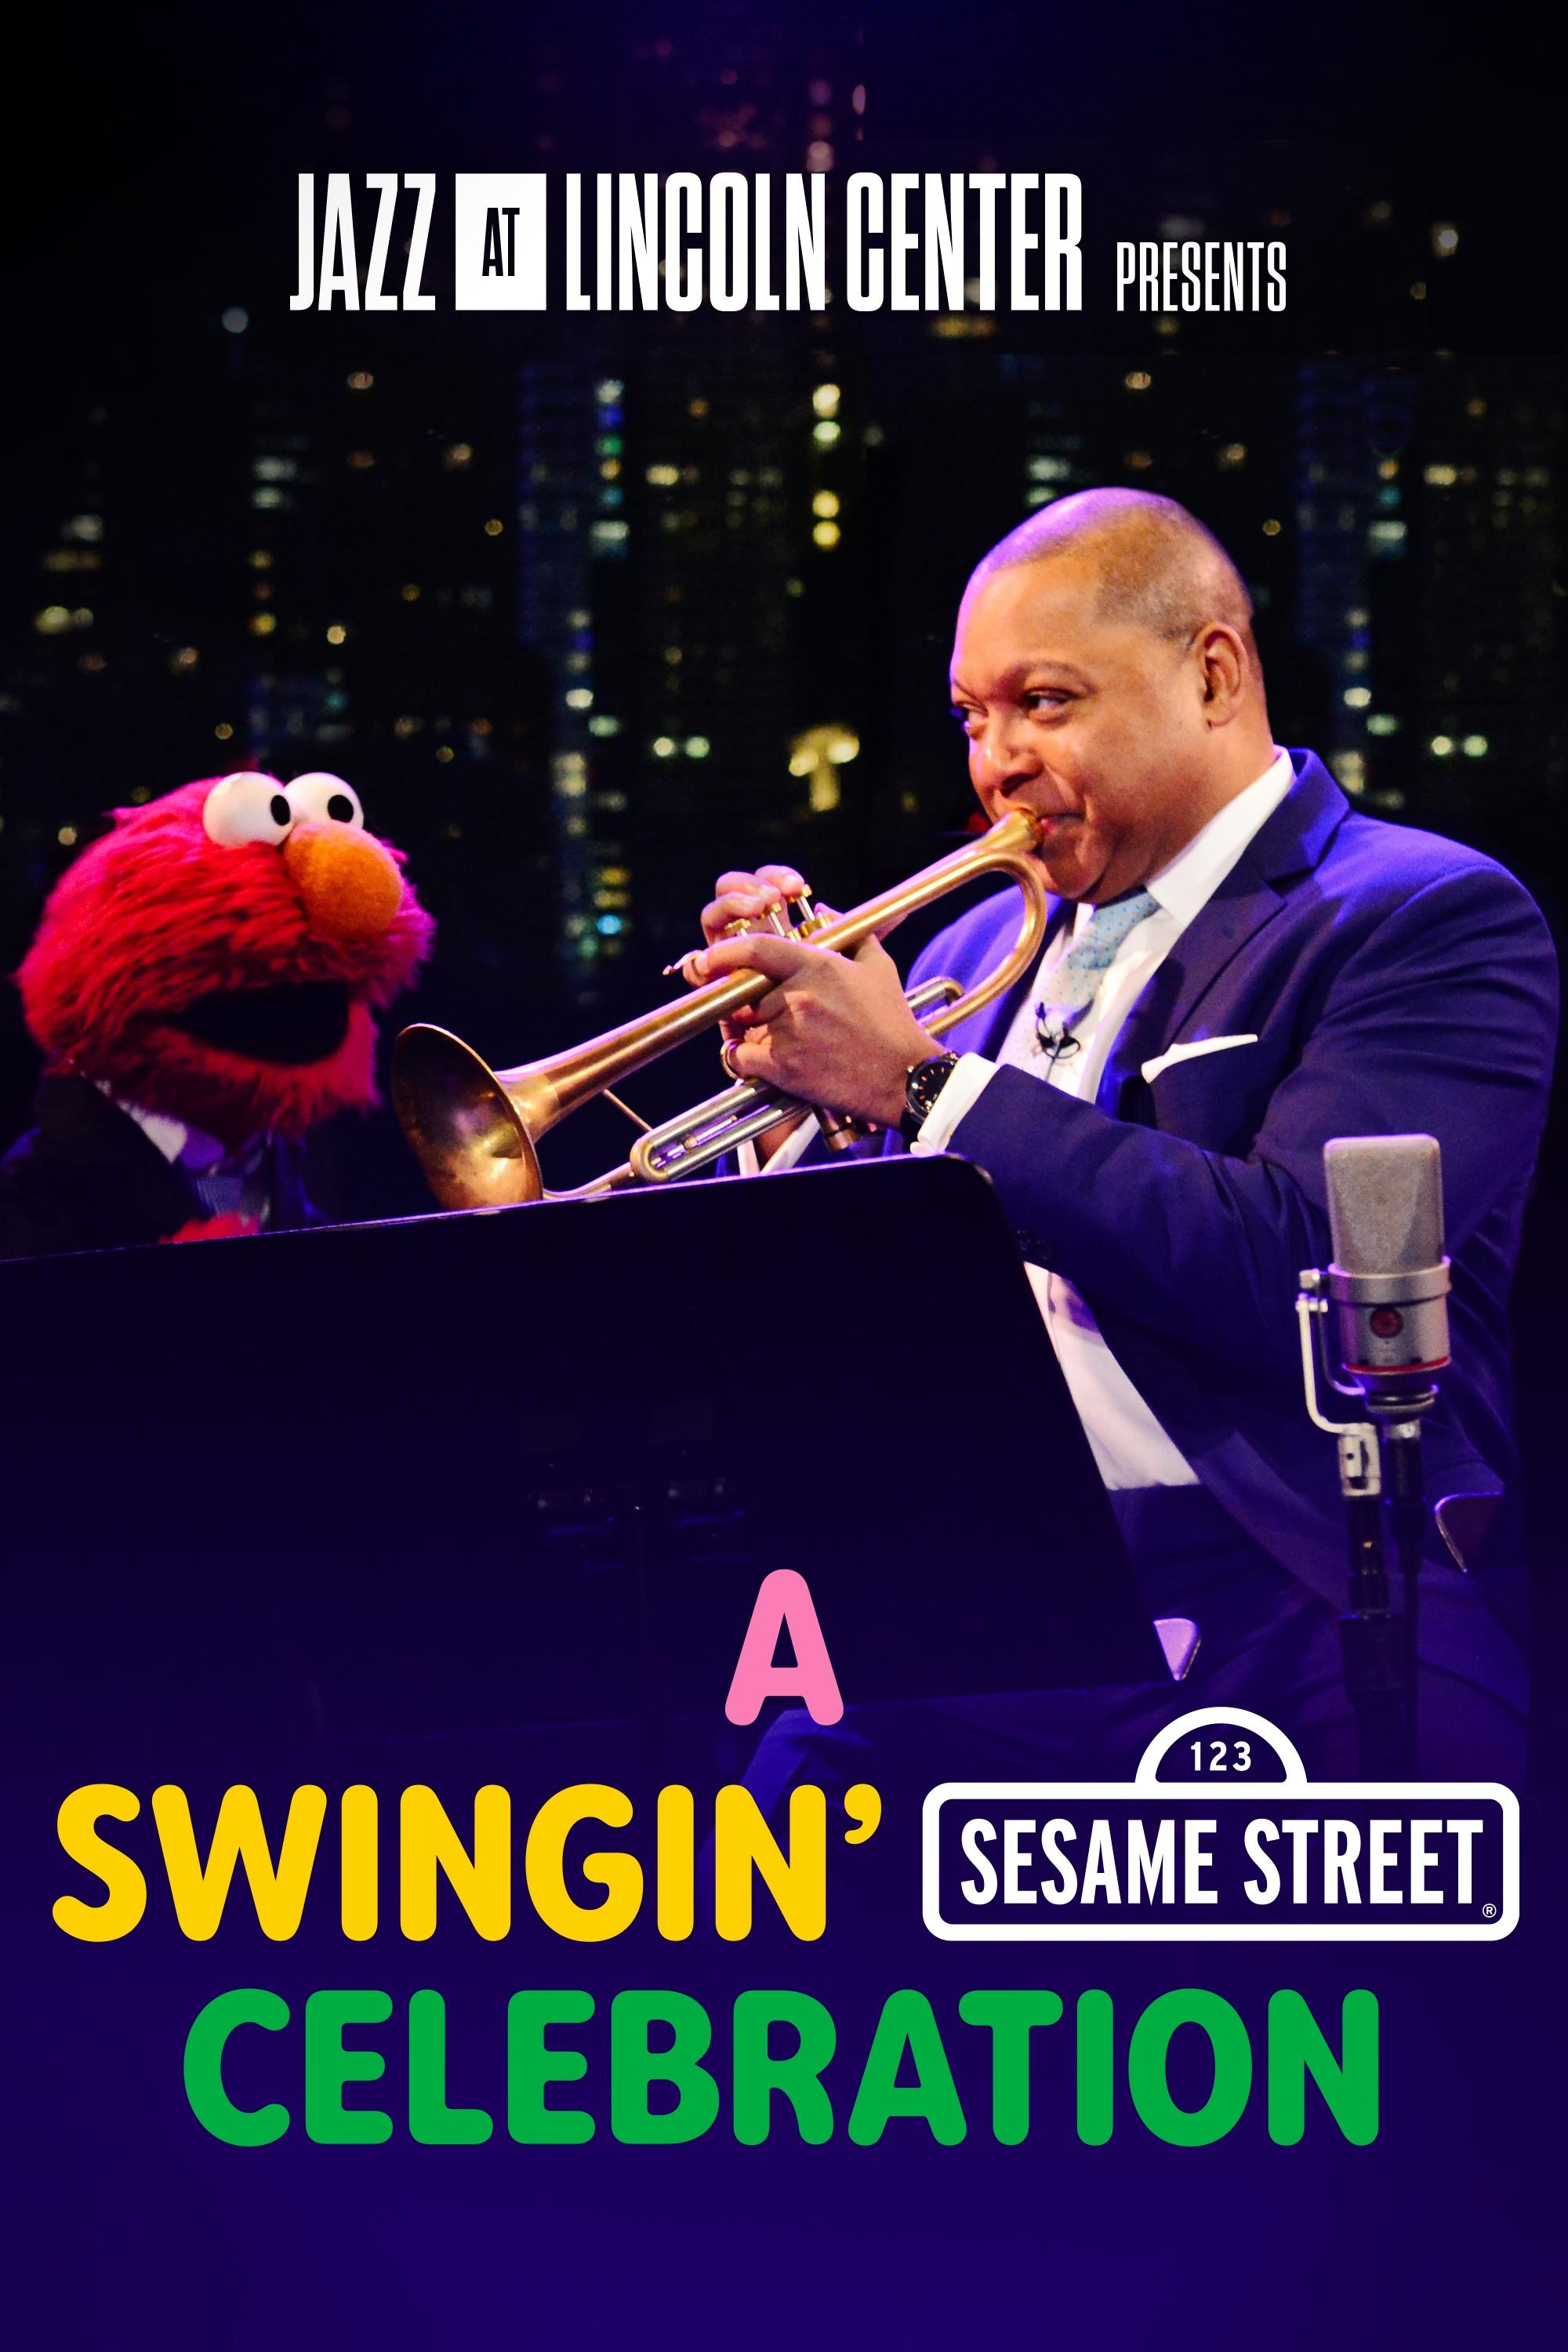 Jazz at Lincoln Center Presents: A Swingin' Sesame Street